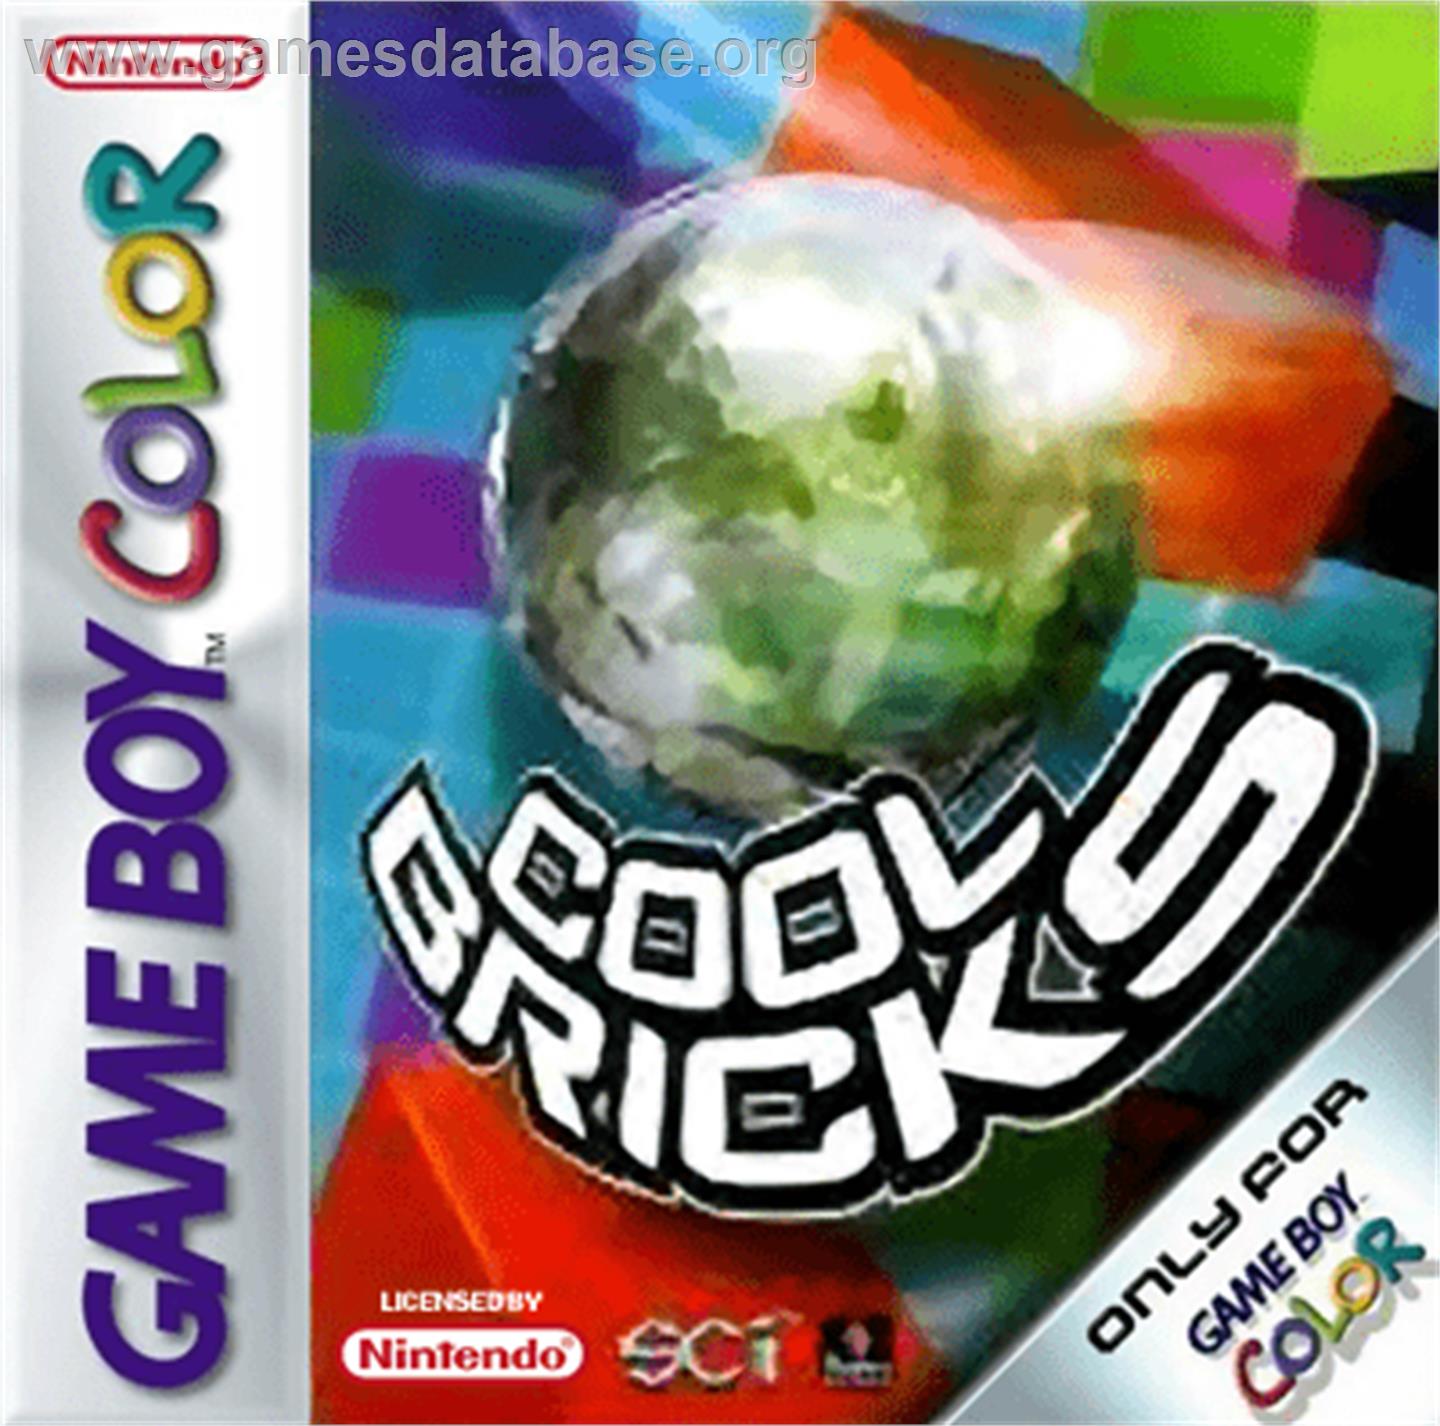 Cool Bricks - Nintendo Game Boy Color - Artwork - Box